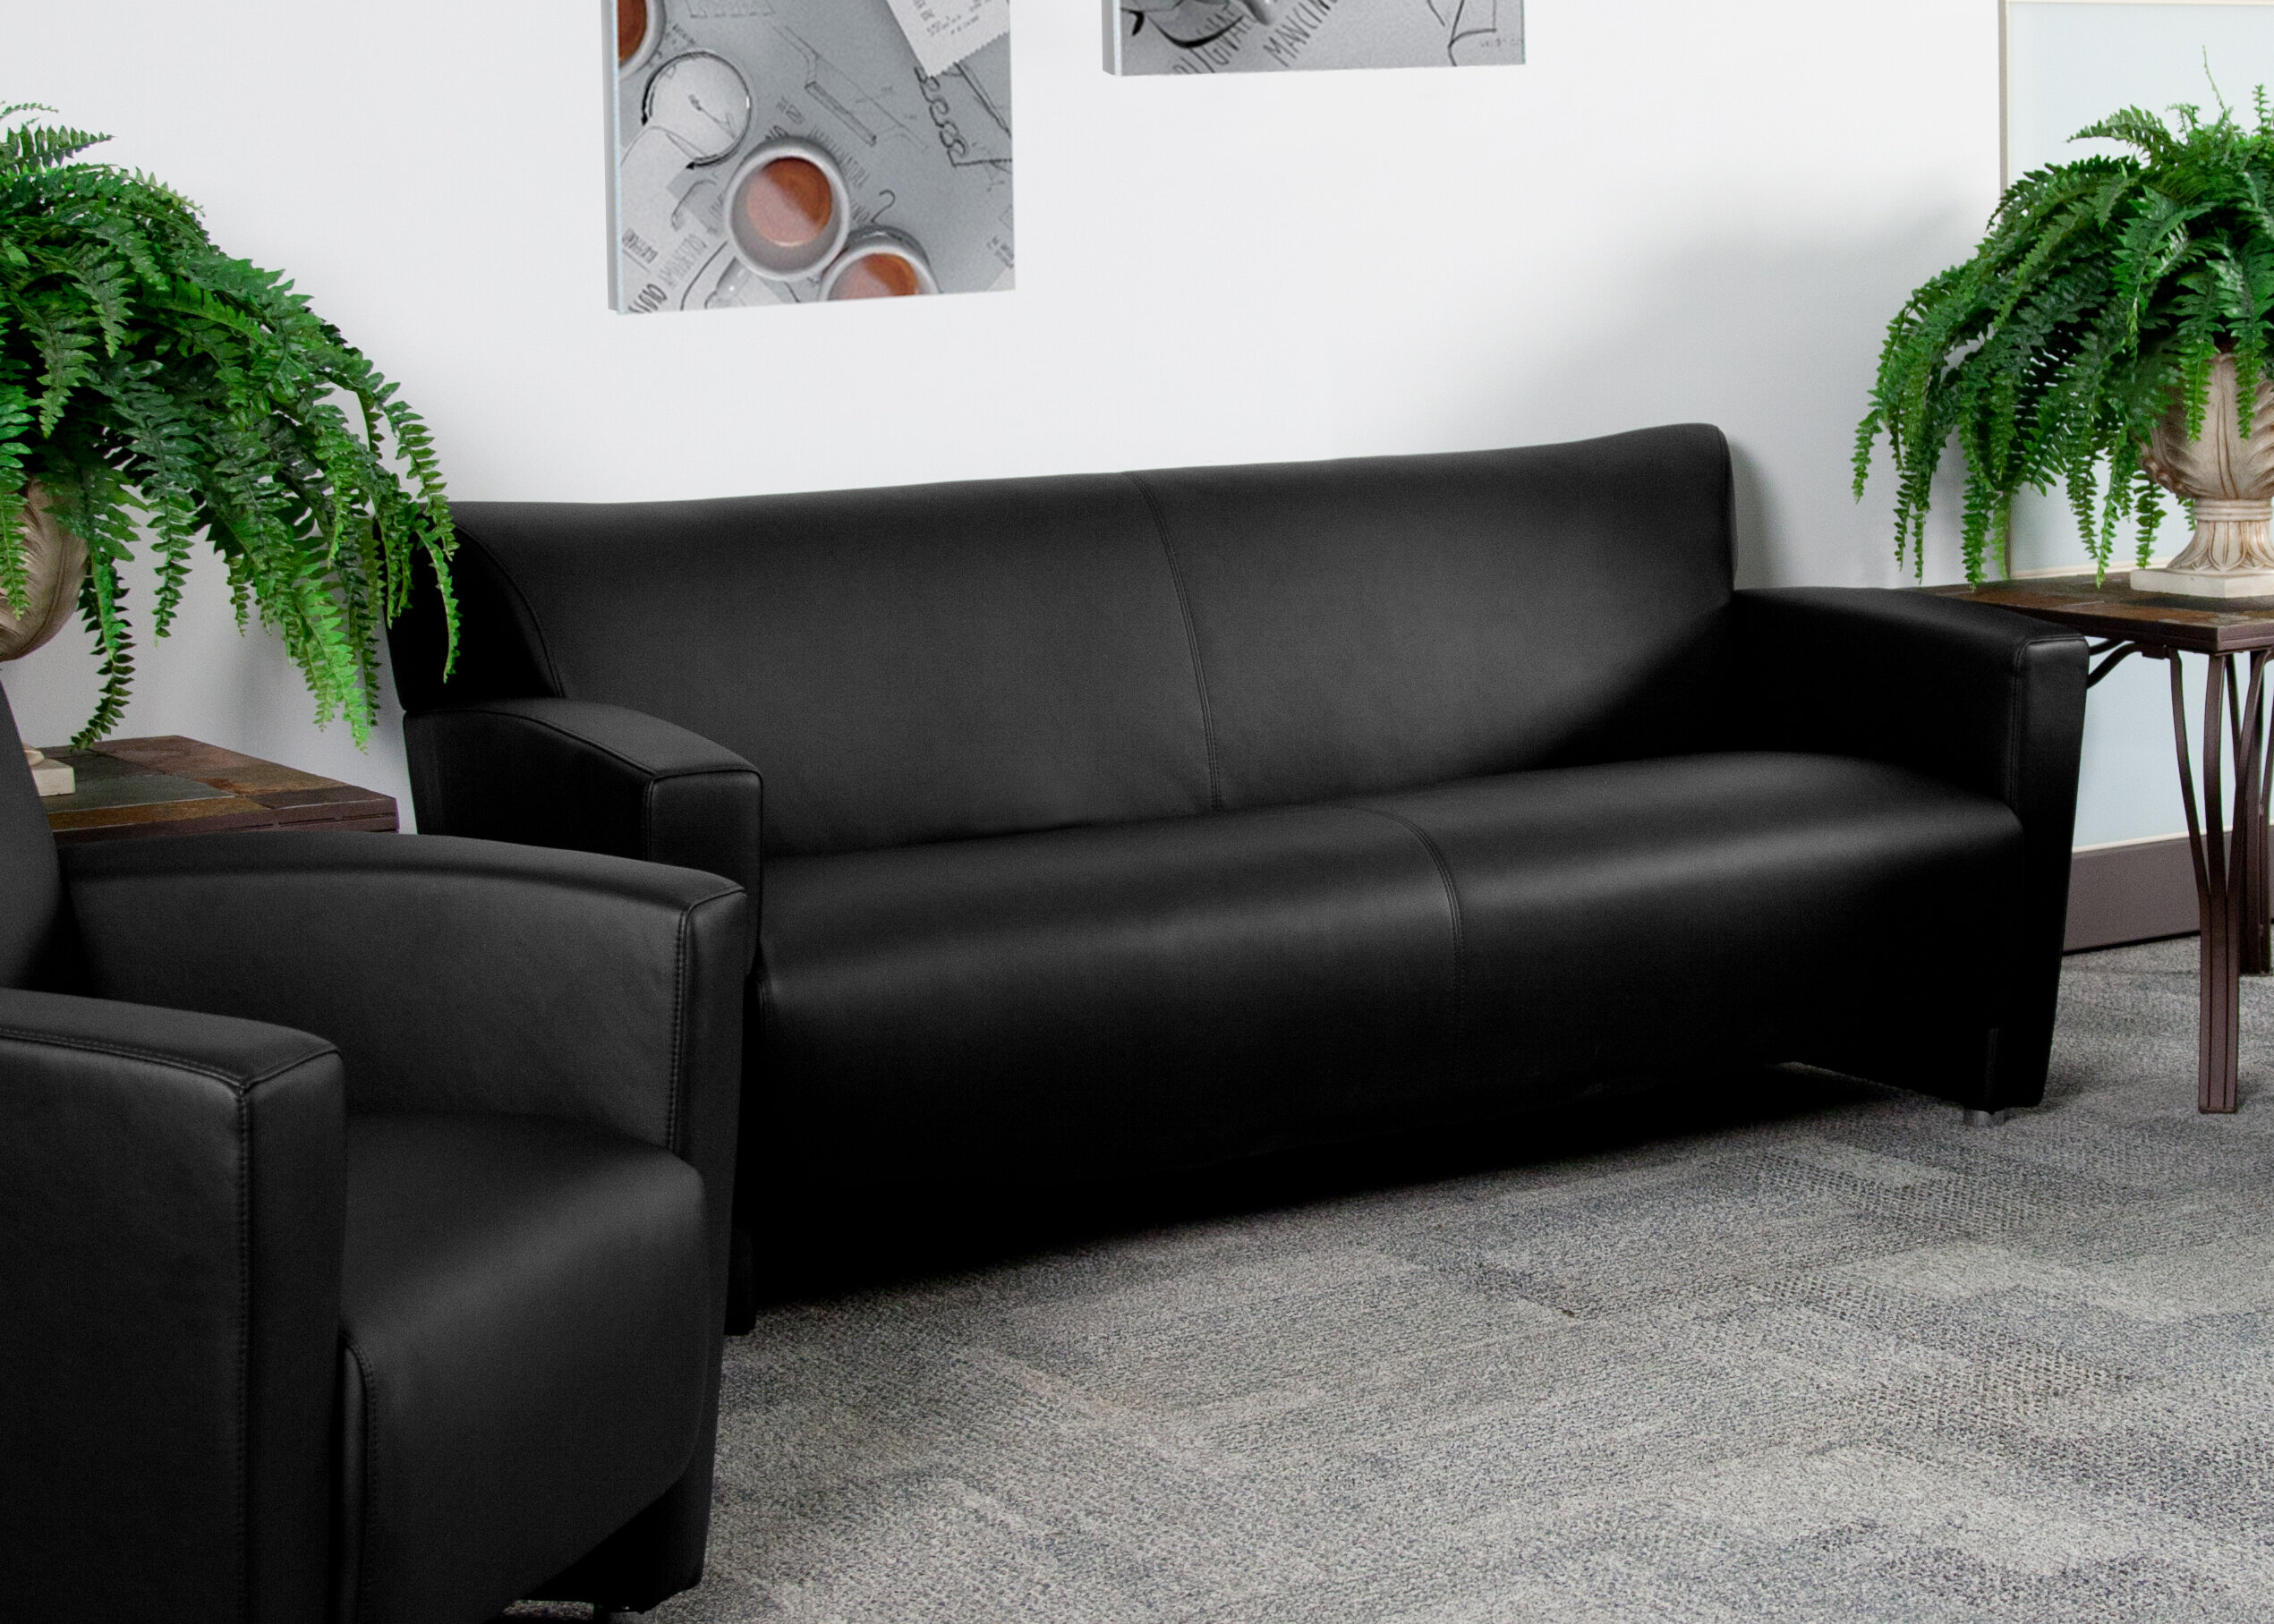 Ebern Designs Gaige Leather Sofa Reviews Wayfair